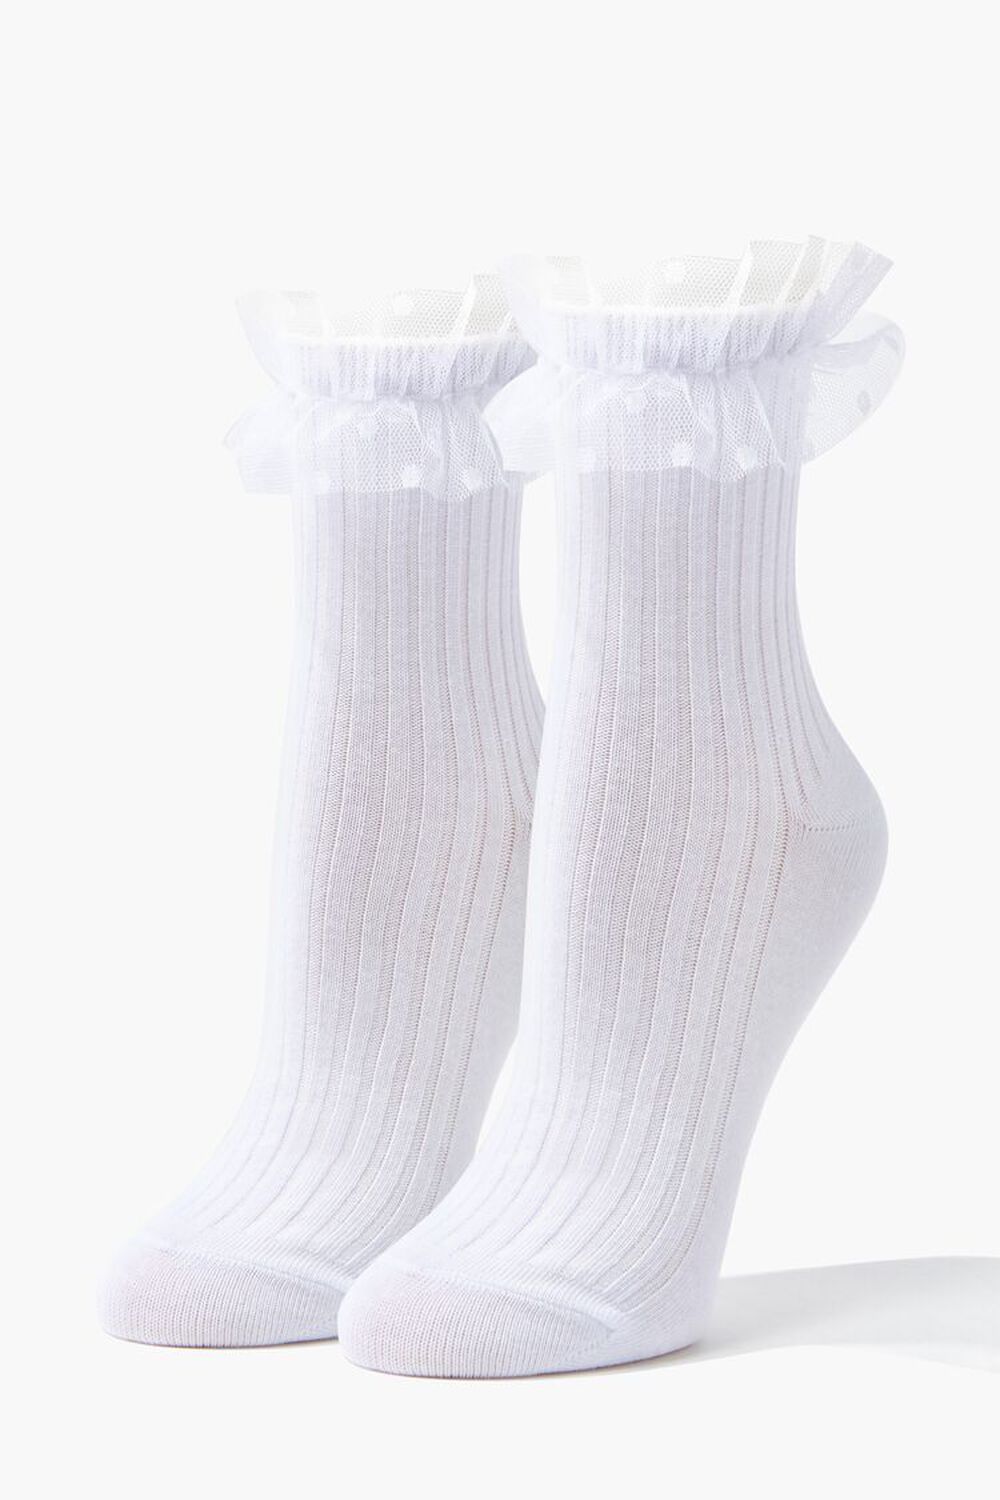 WHITE Polka Dot Lace-Trim Crew Socks, image 1